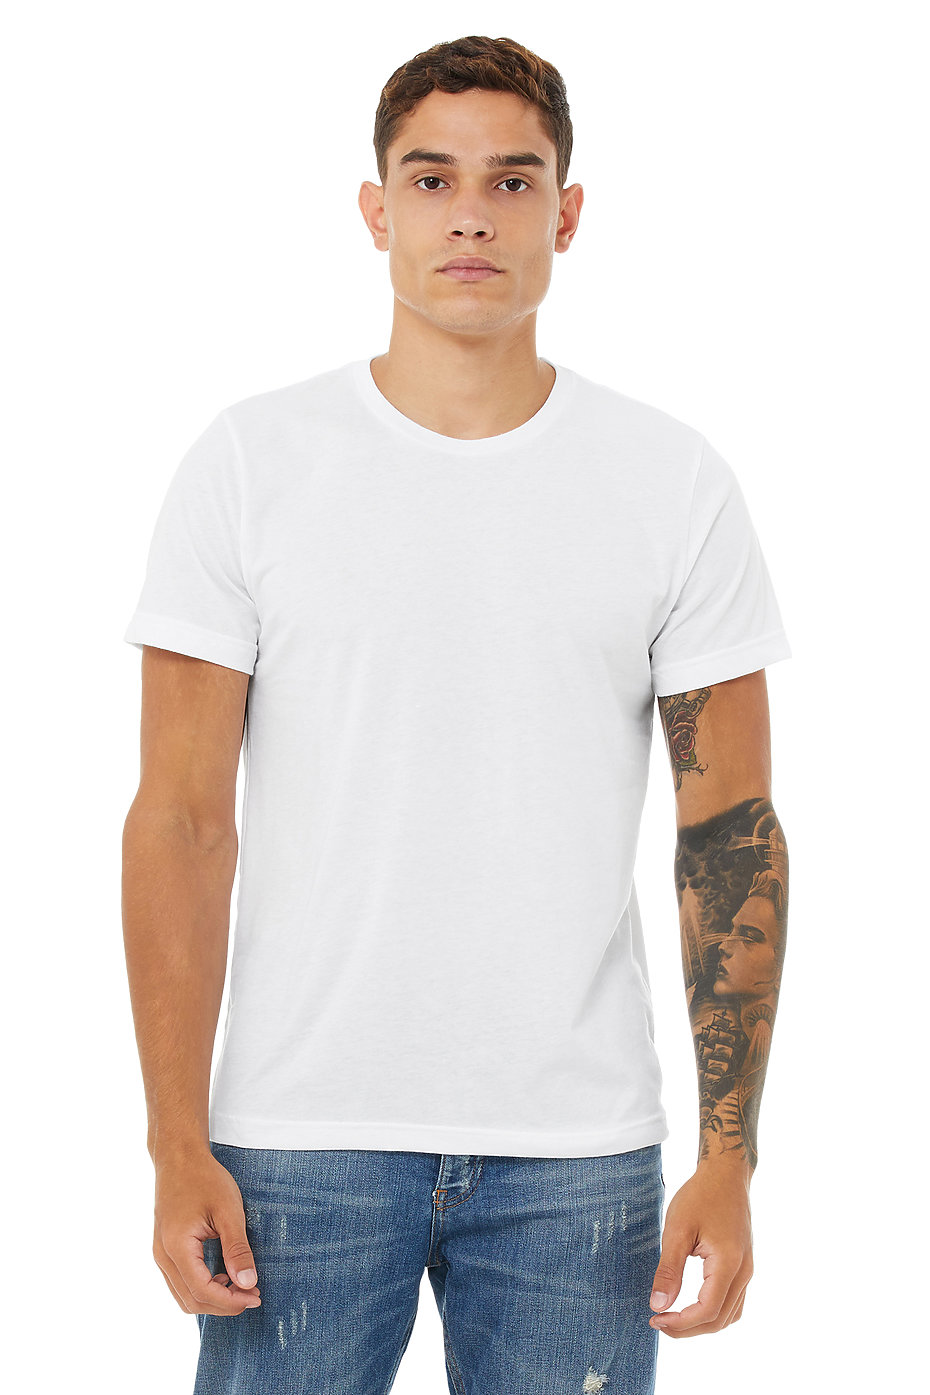 Unisex Poly Cotton Shirts | Unisex Wholesale Clothing | Bulk, Plain Blank T | BELLA+CANVAS ®